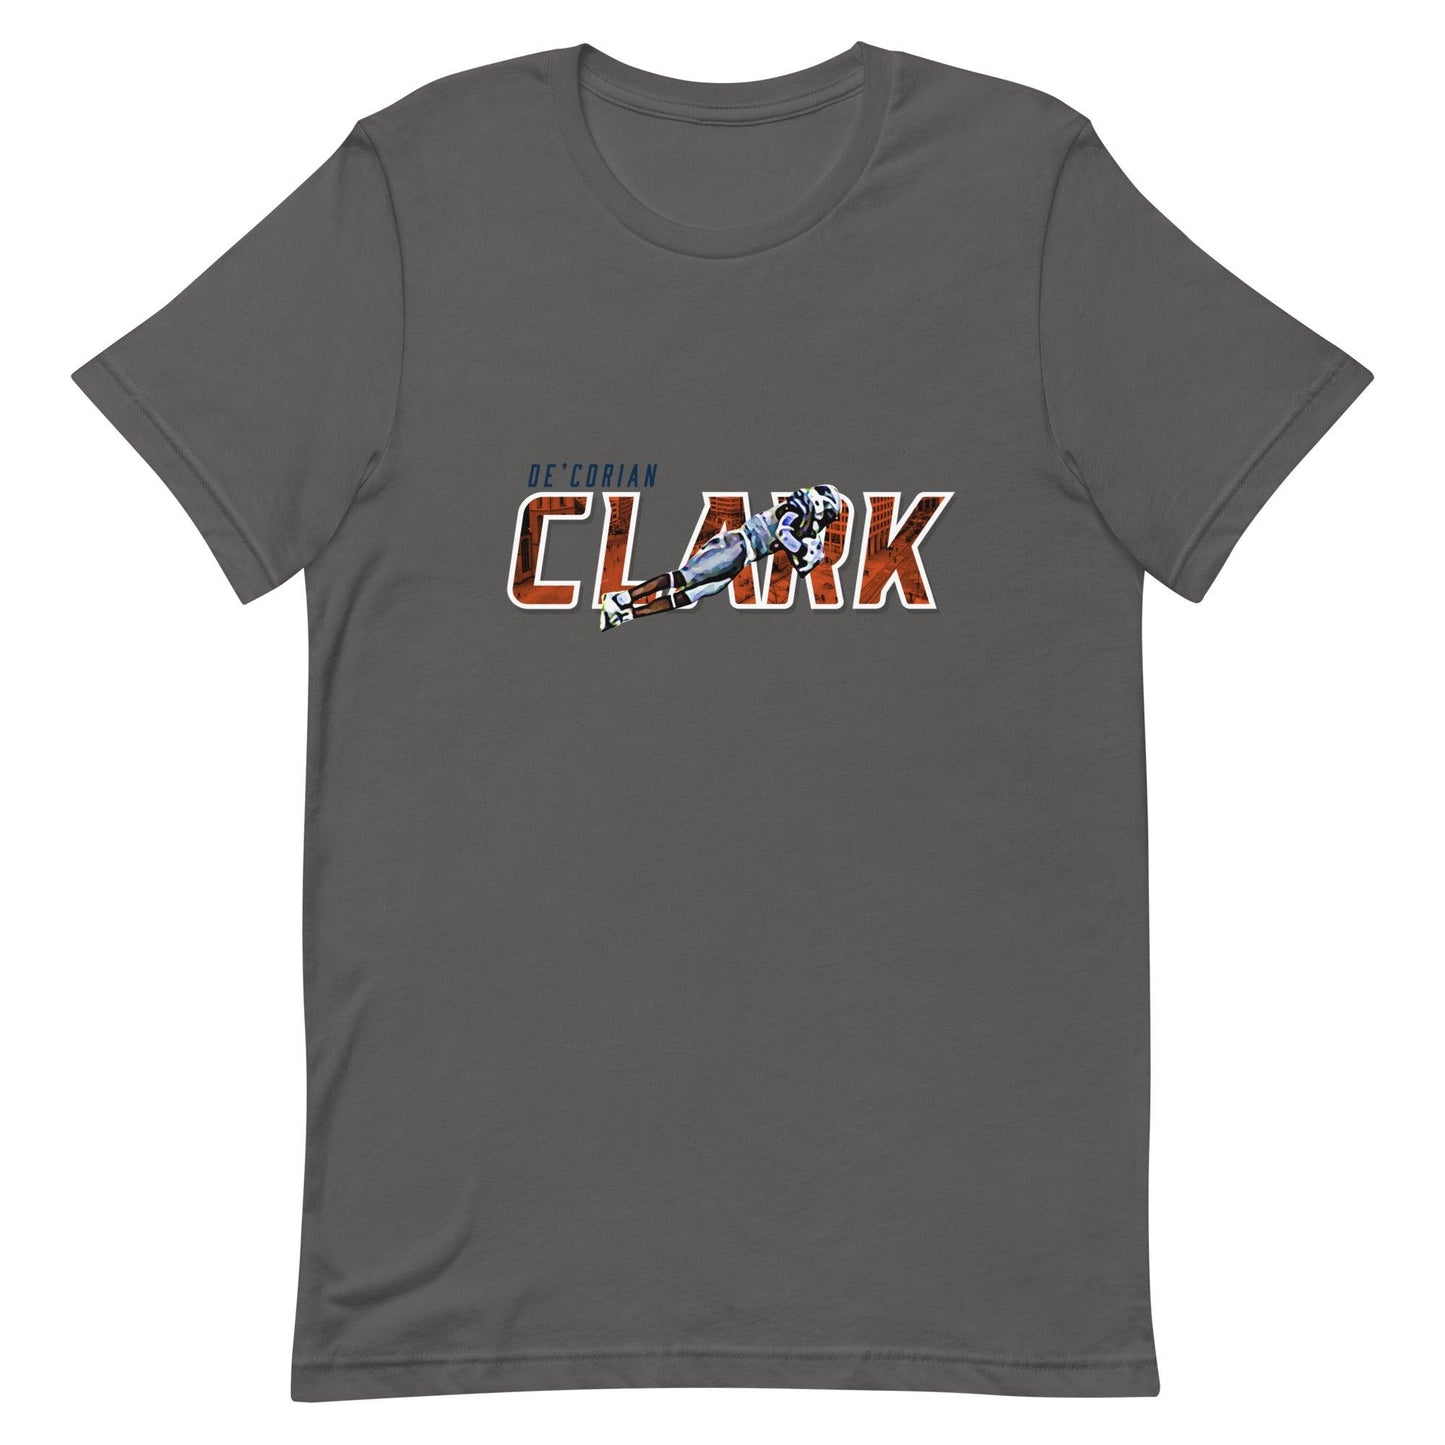 De’Corian Clark "MJ" t-shirt - Fan Arch